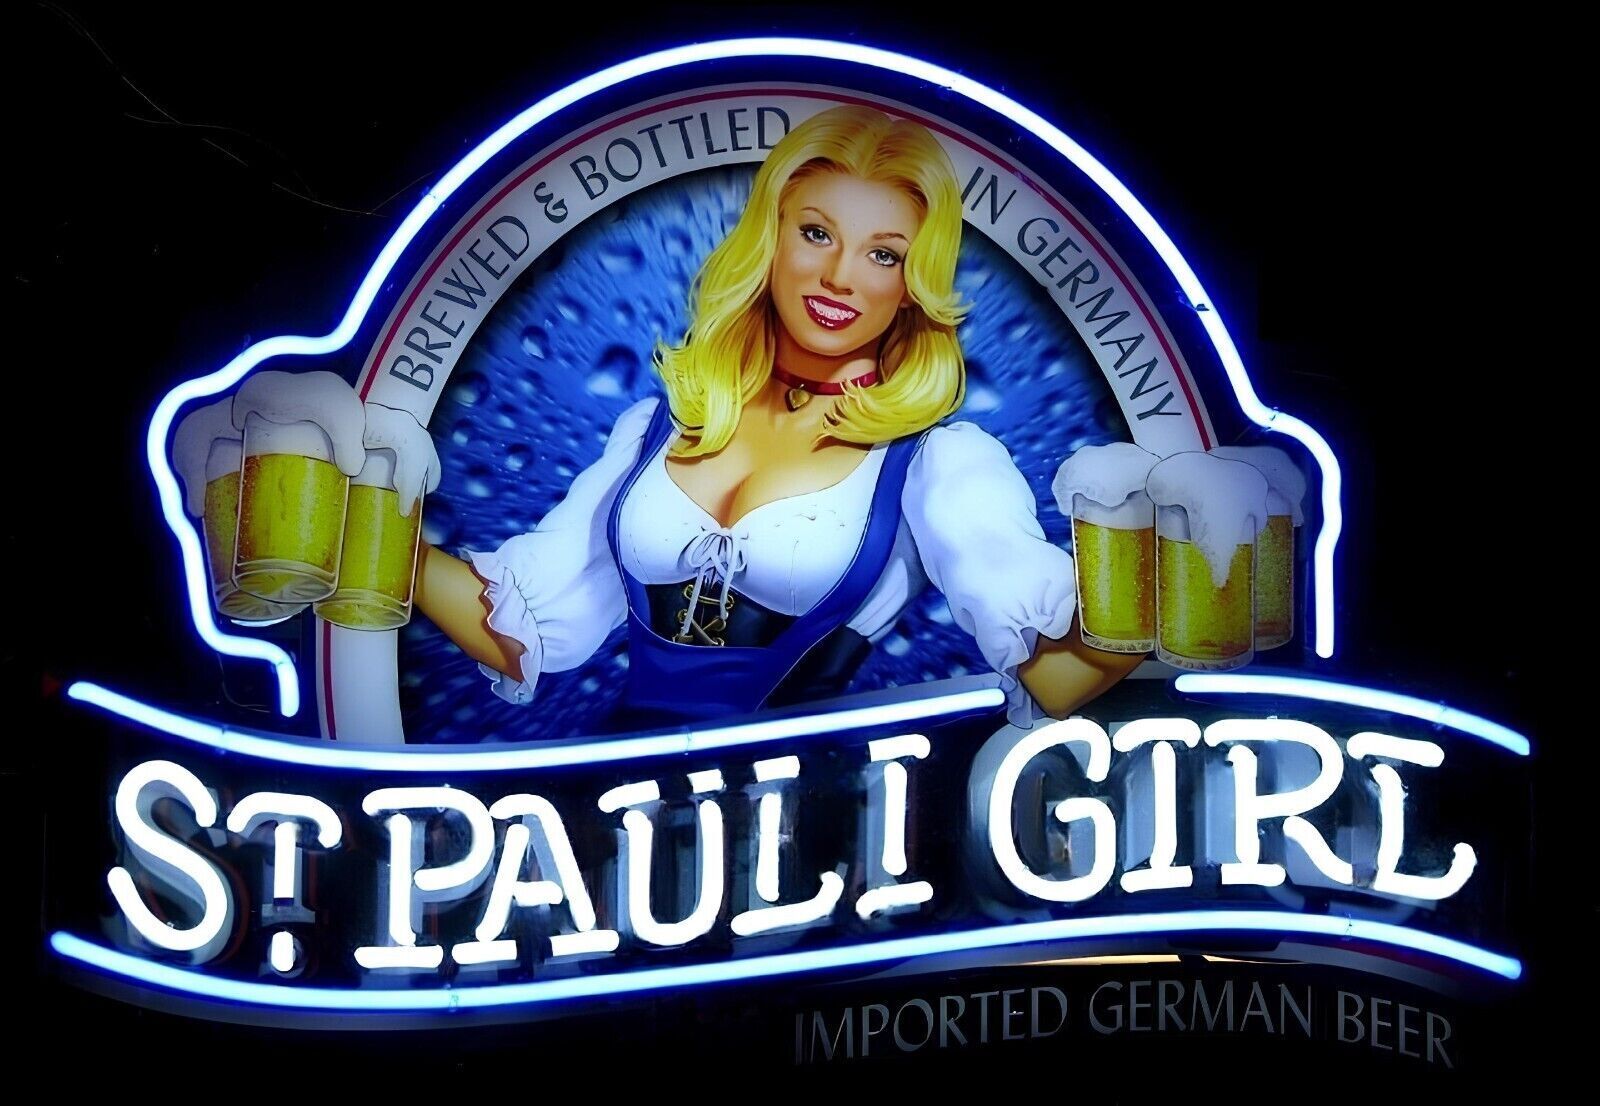 St. Pauli Girl Bier Imported Beer 24